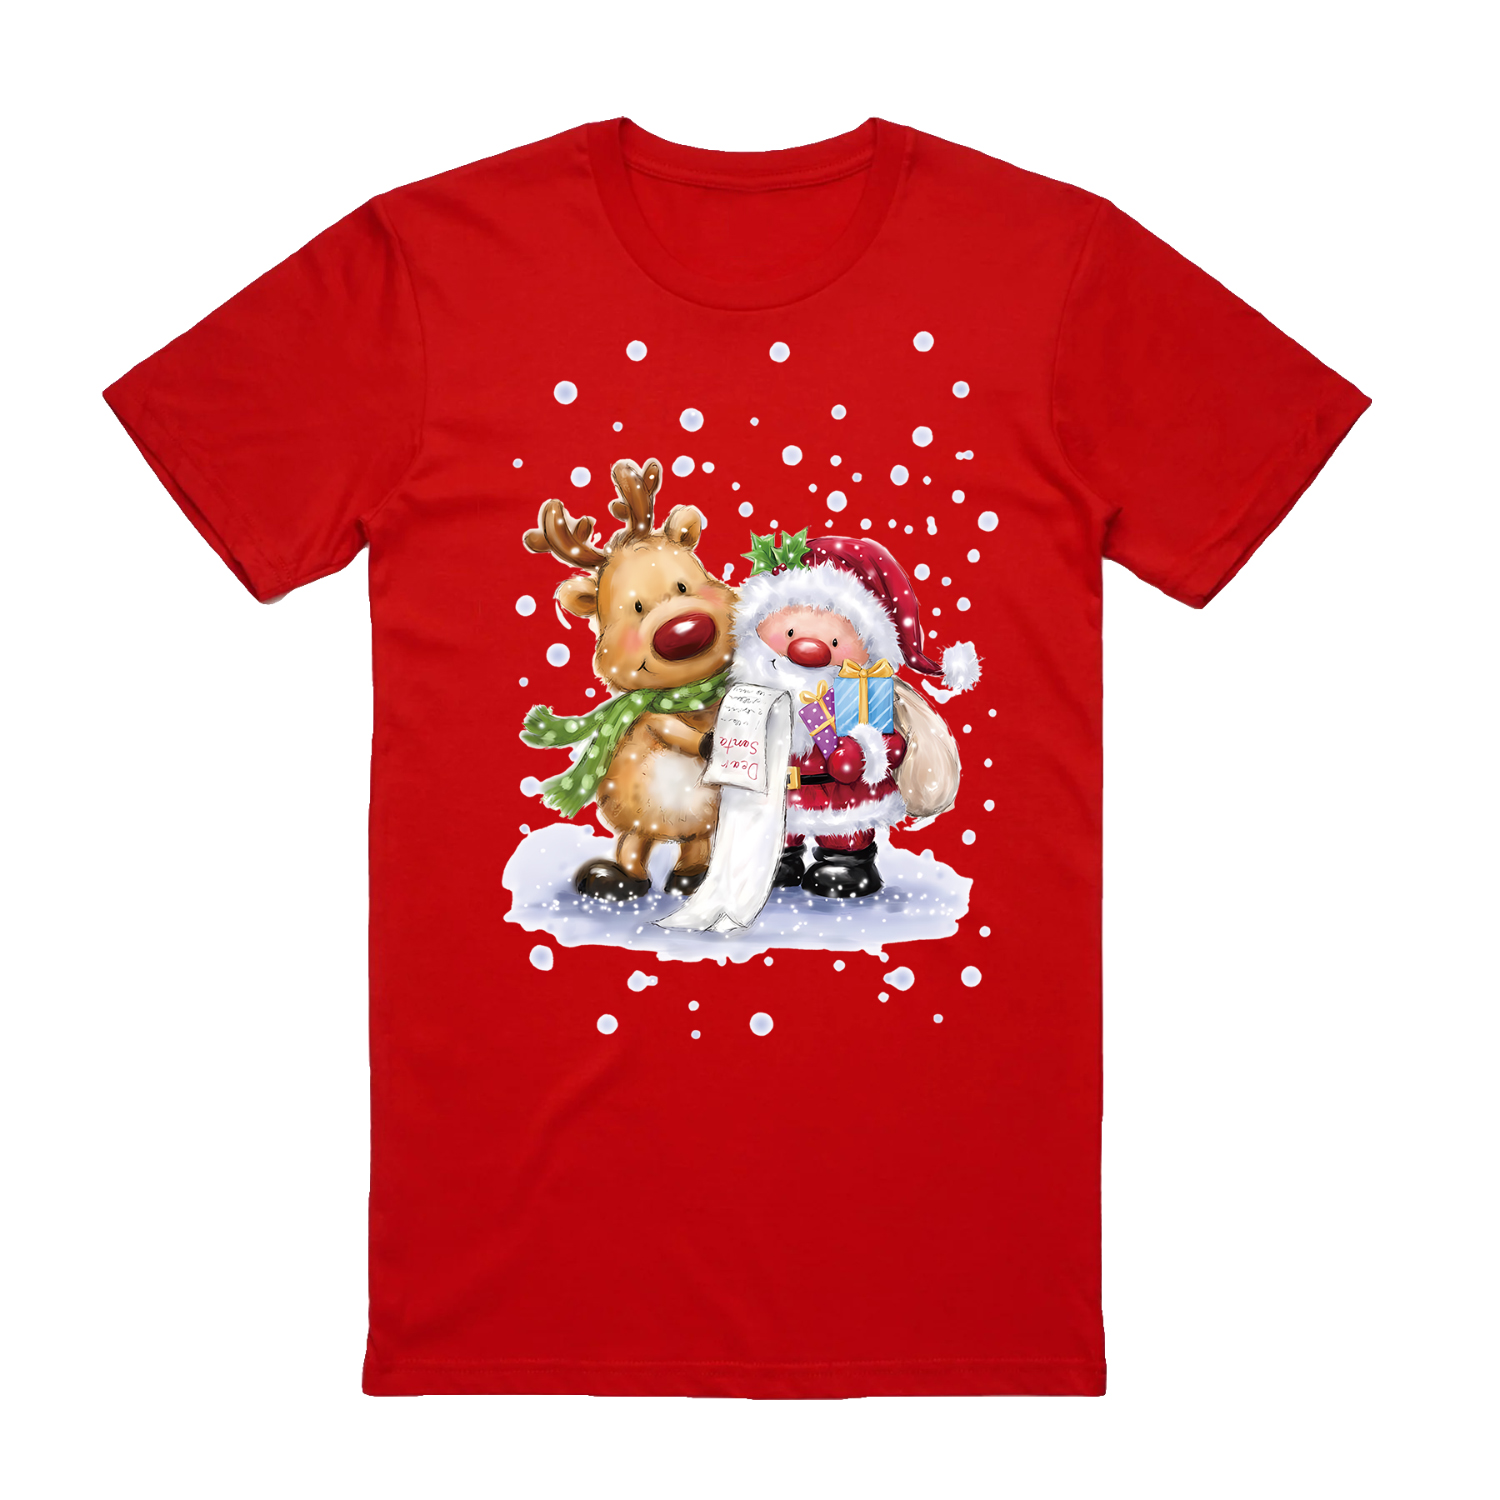 100% Cotton Christmas T-shirt Adult Unisex Tee Tops - Reading Santa